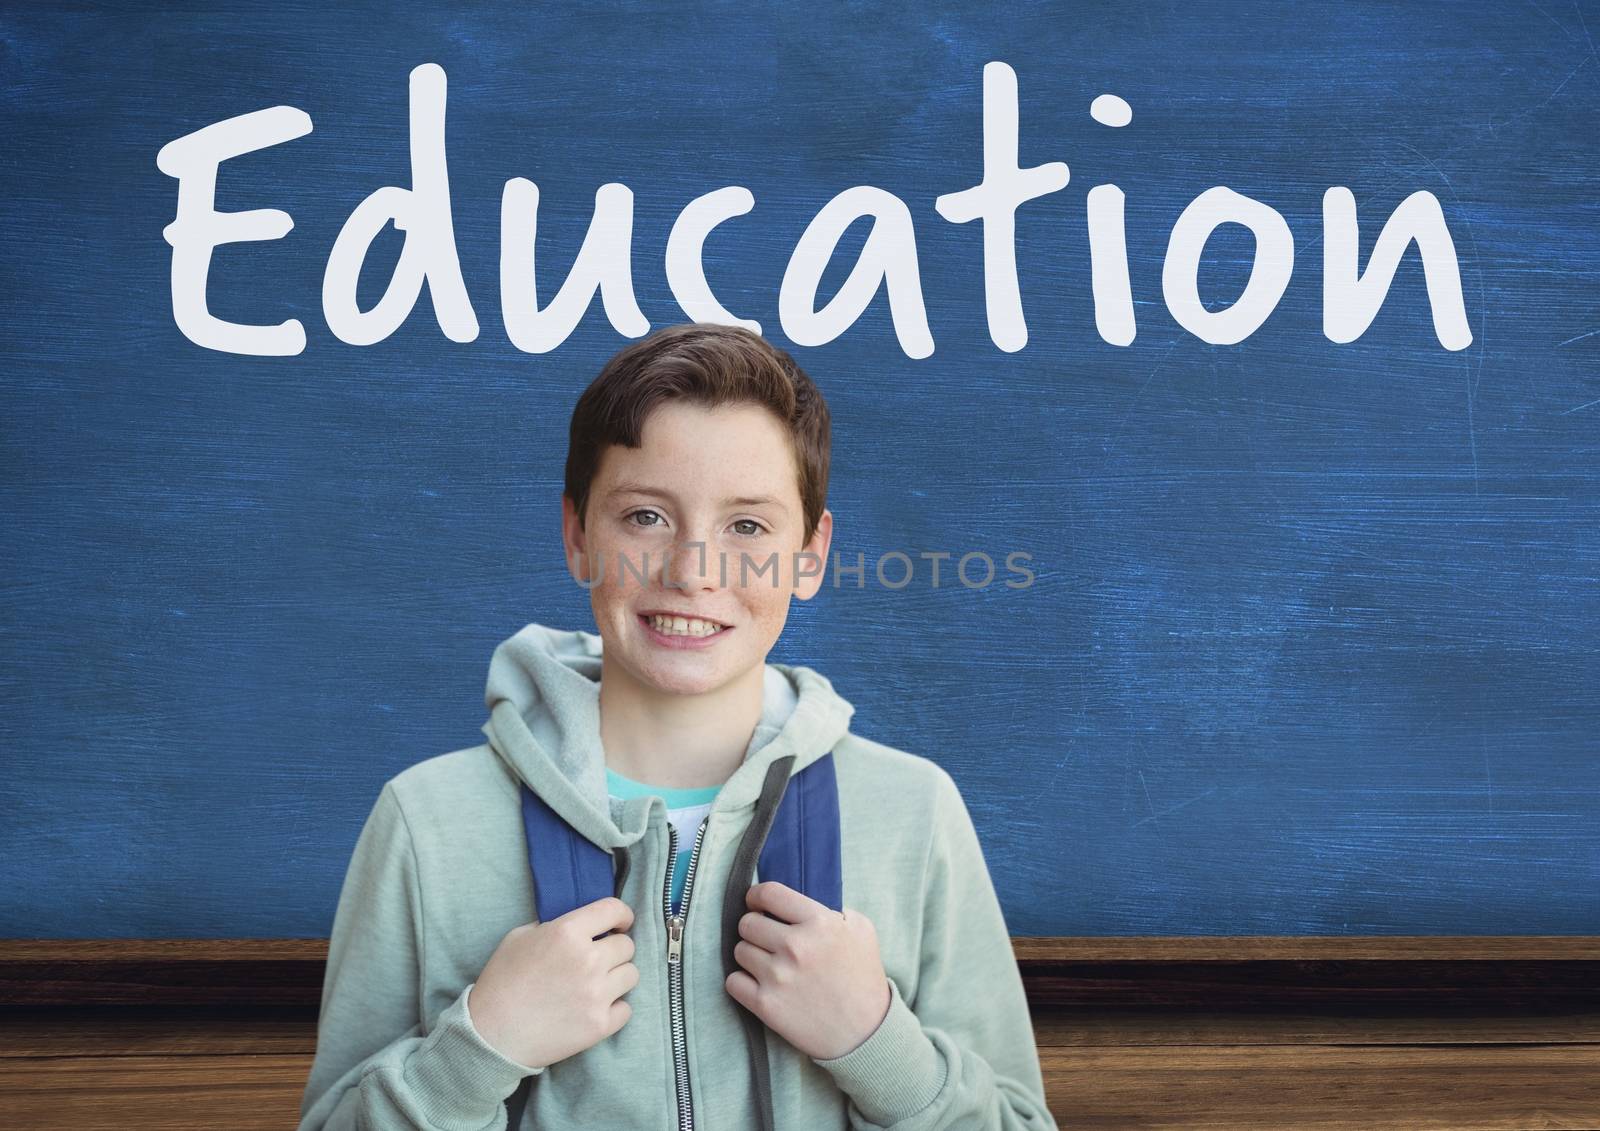 Education text on blackboard with school student by Wavebreakmedia